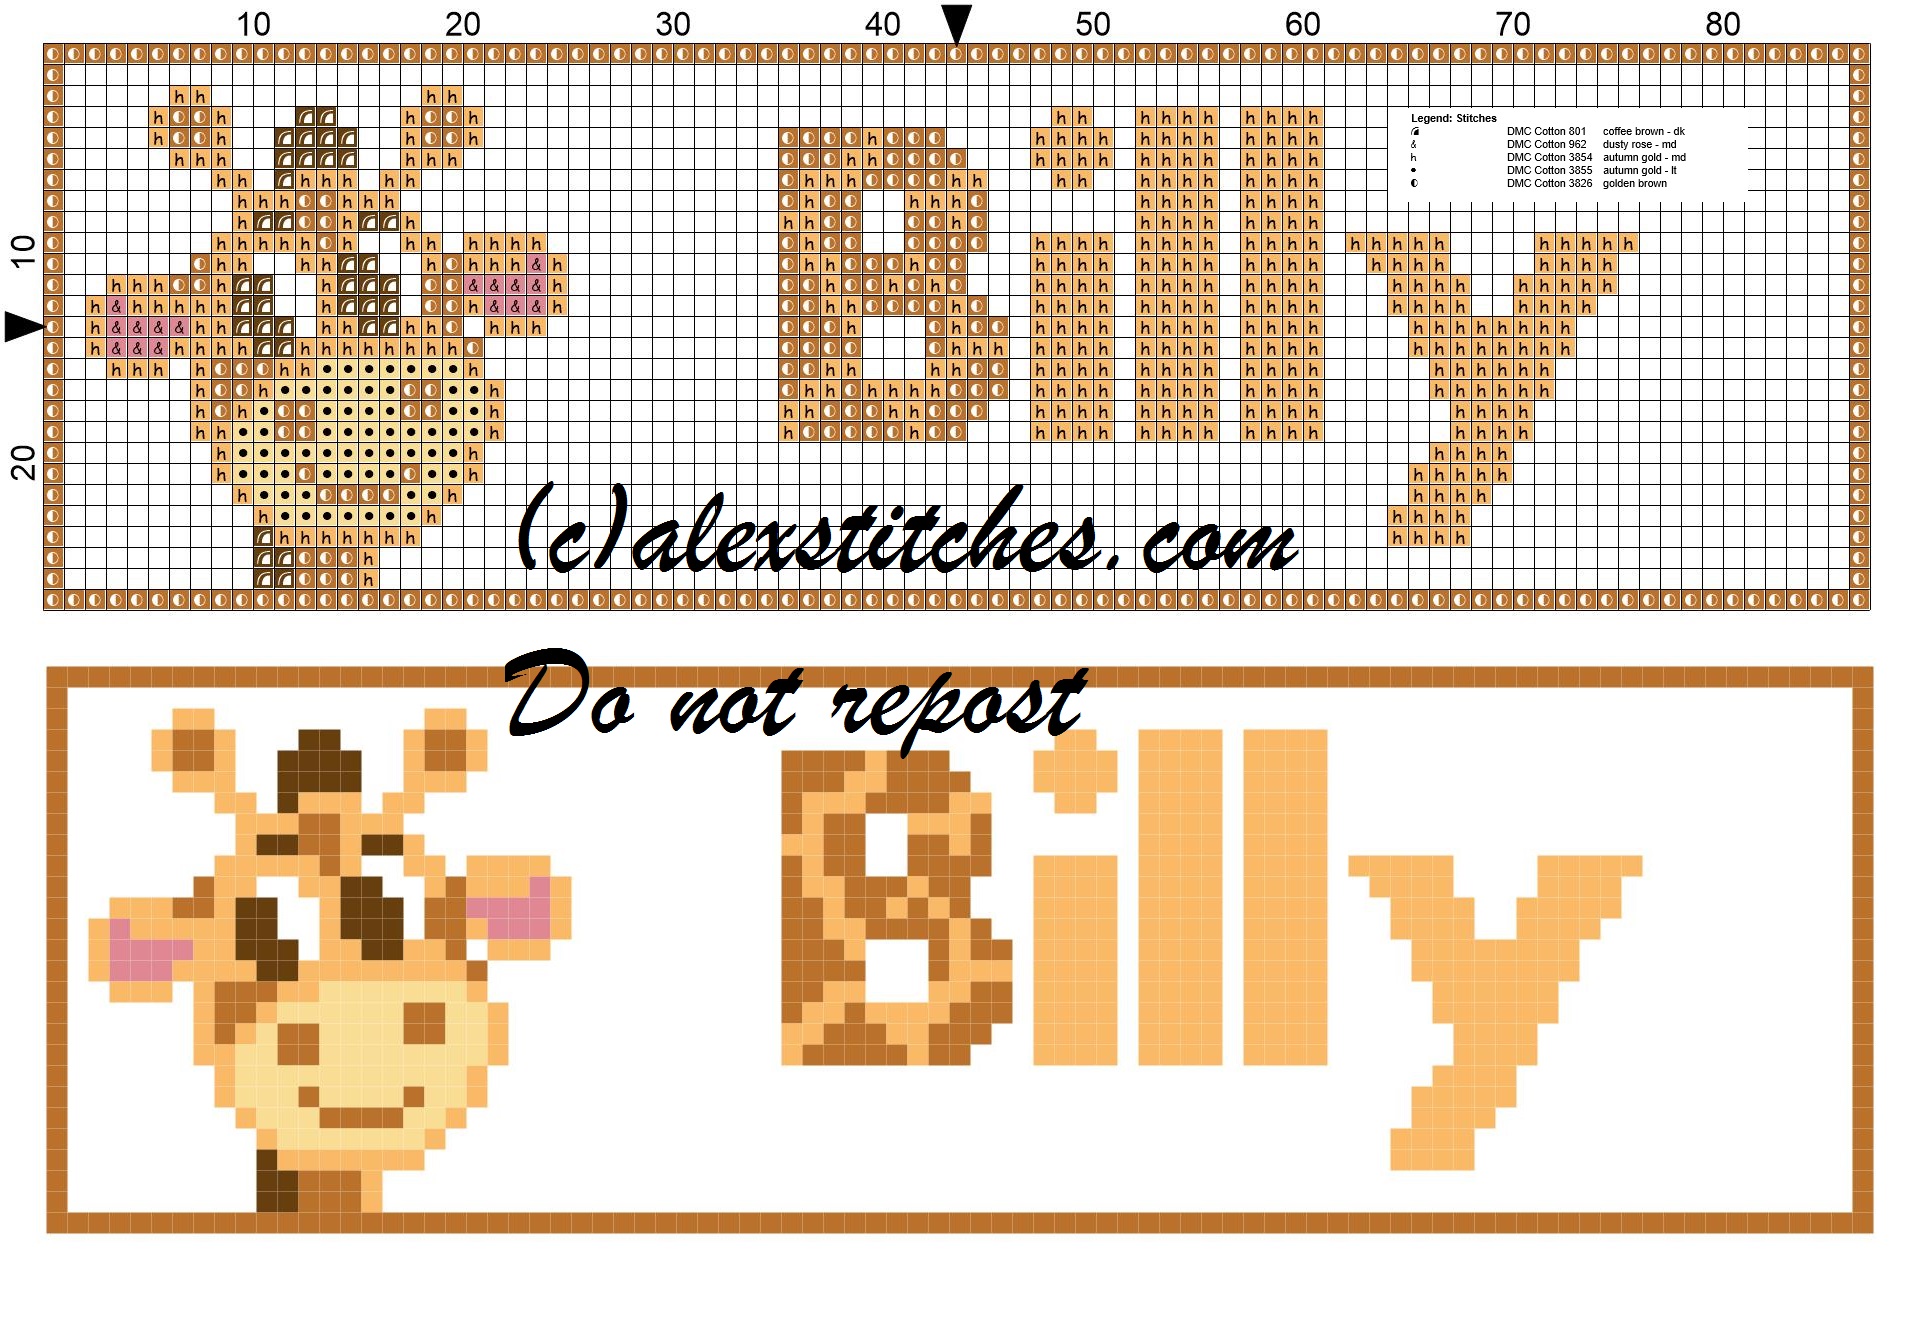 Billy name with giraffe cross stitch pattern